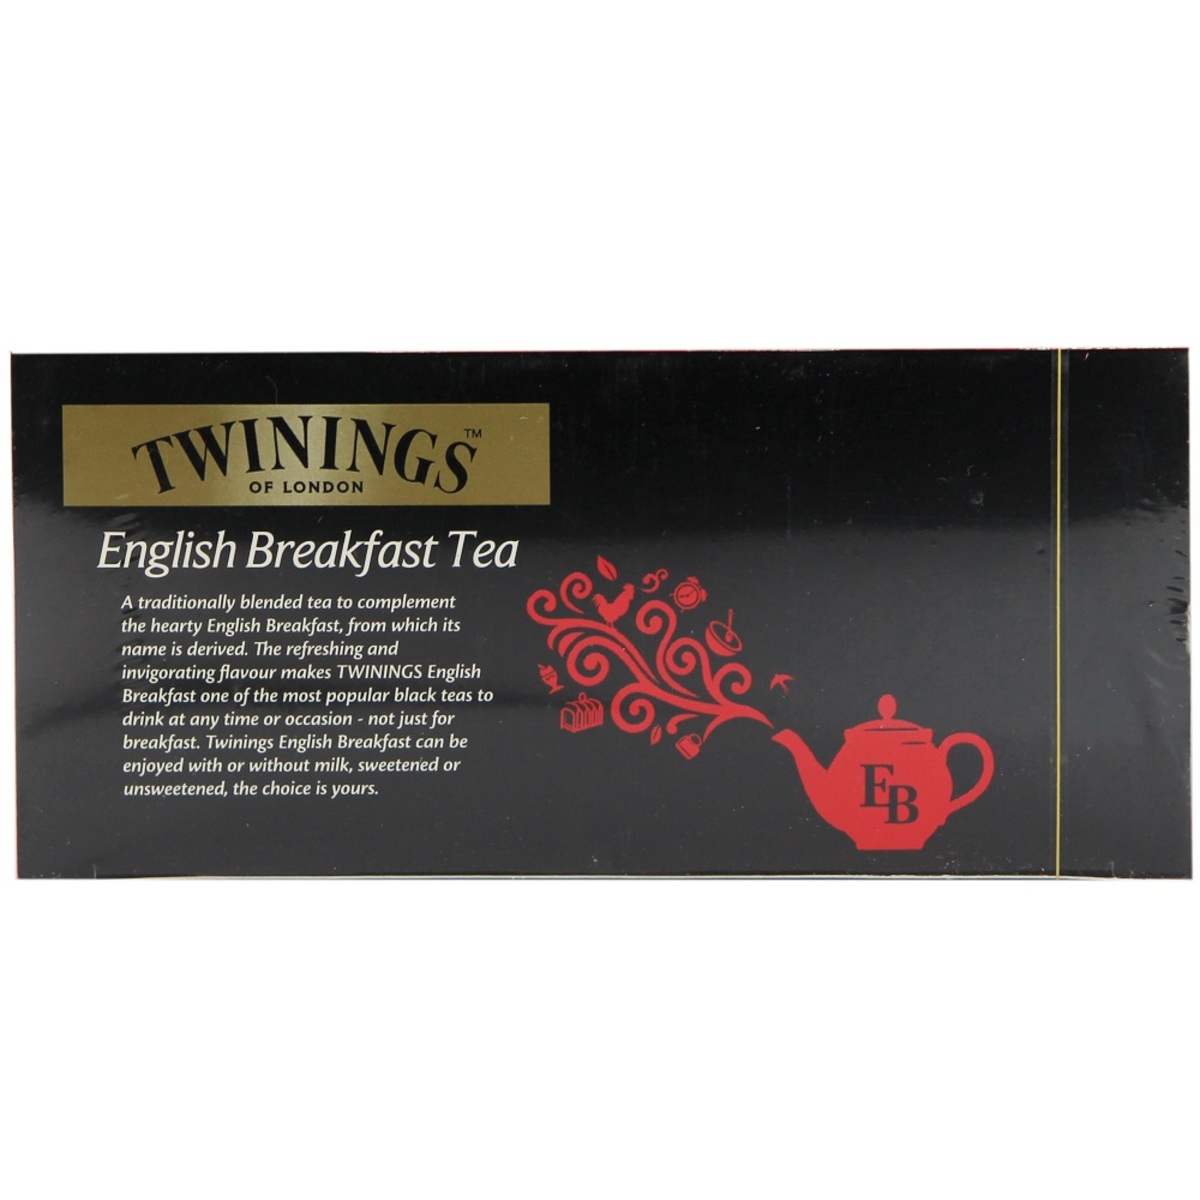 Twinings English Breakfast Tea 25 Tea Bags